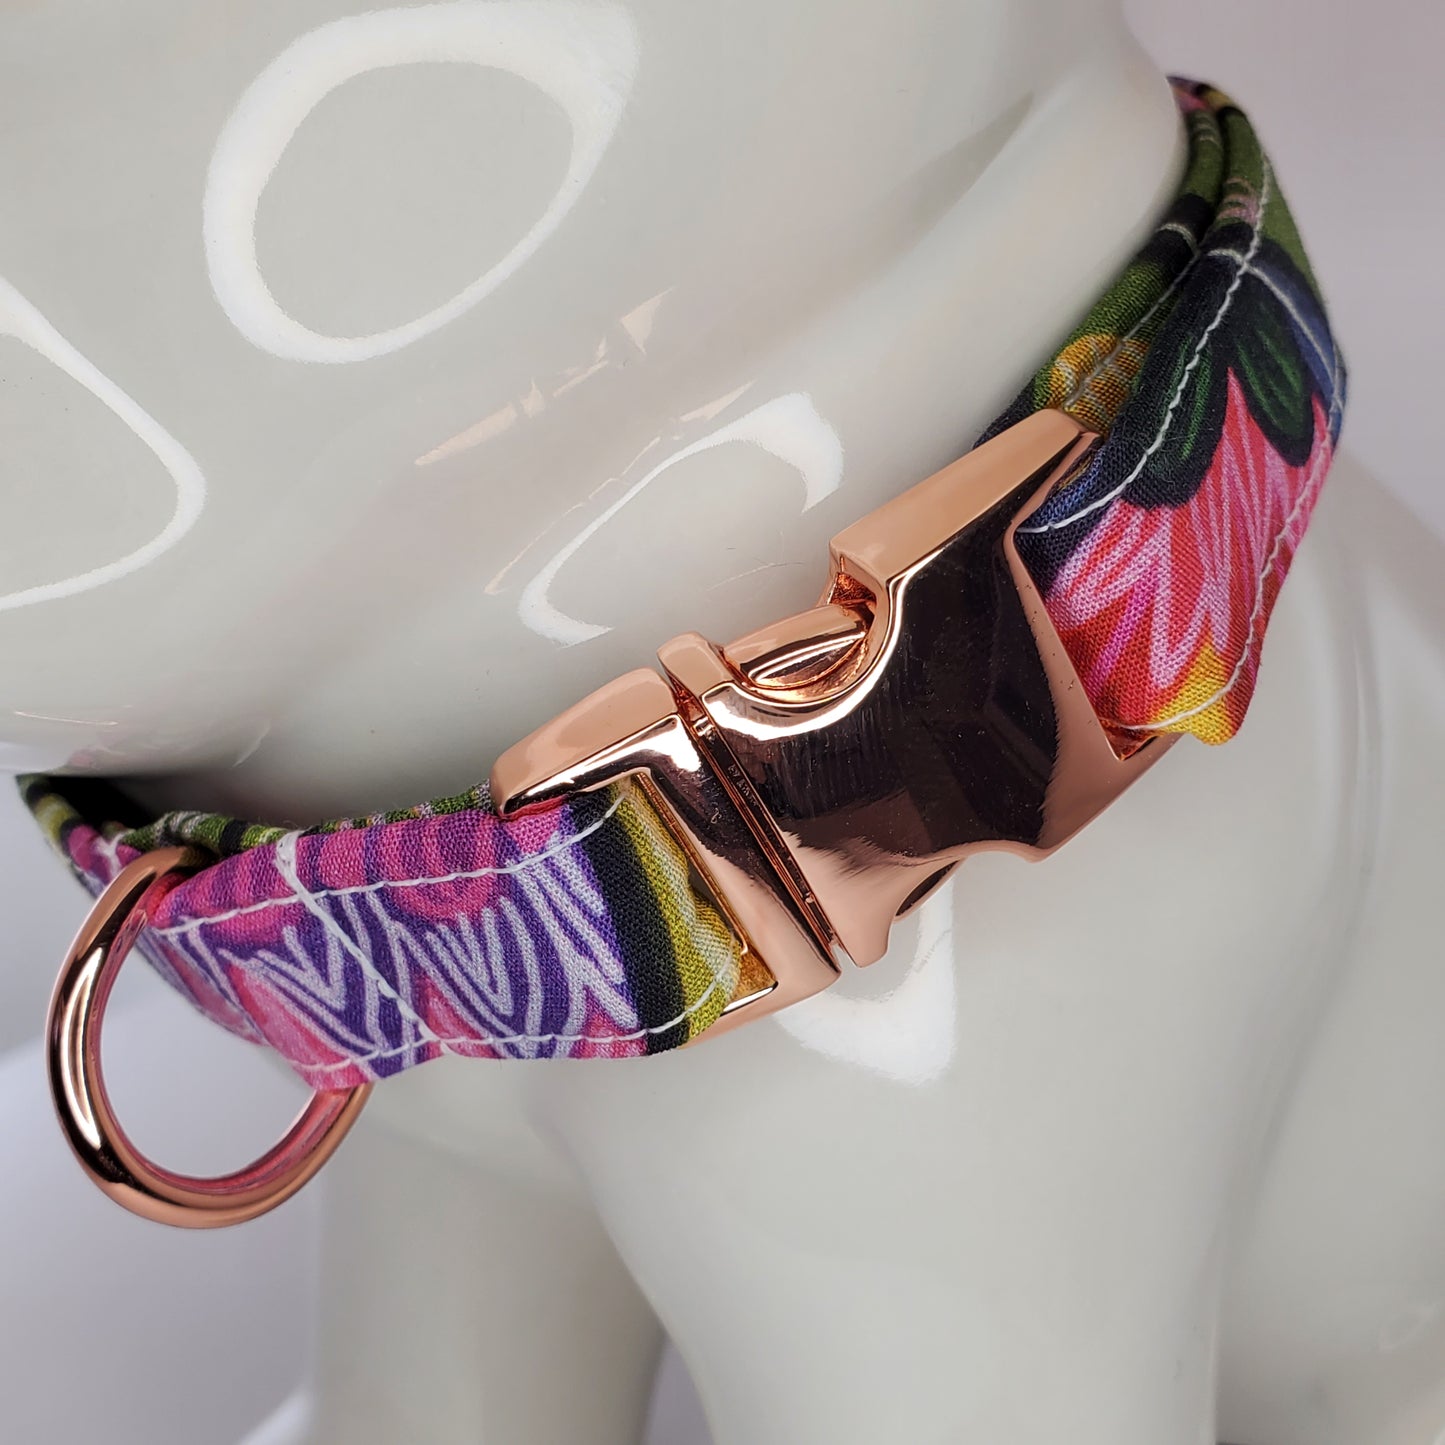 Small bright Australian blooms fabric dog collar